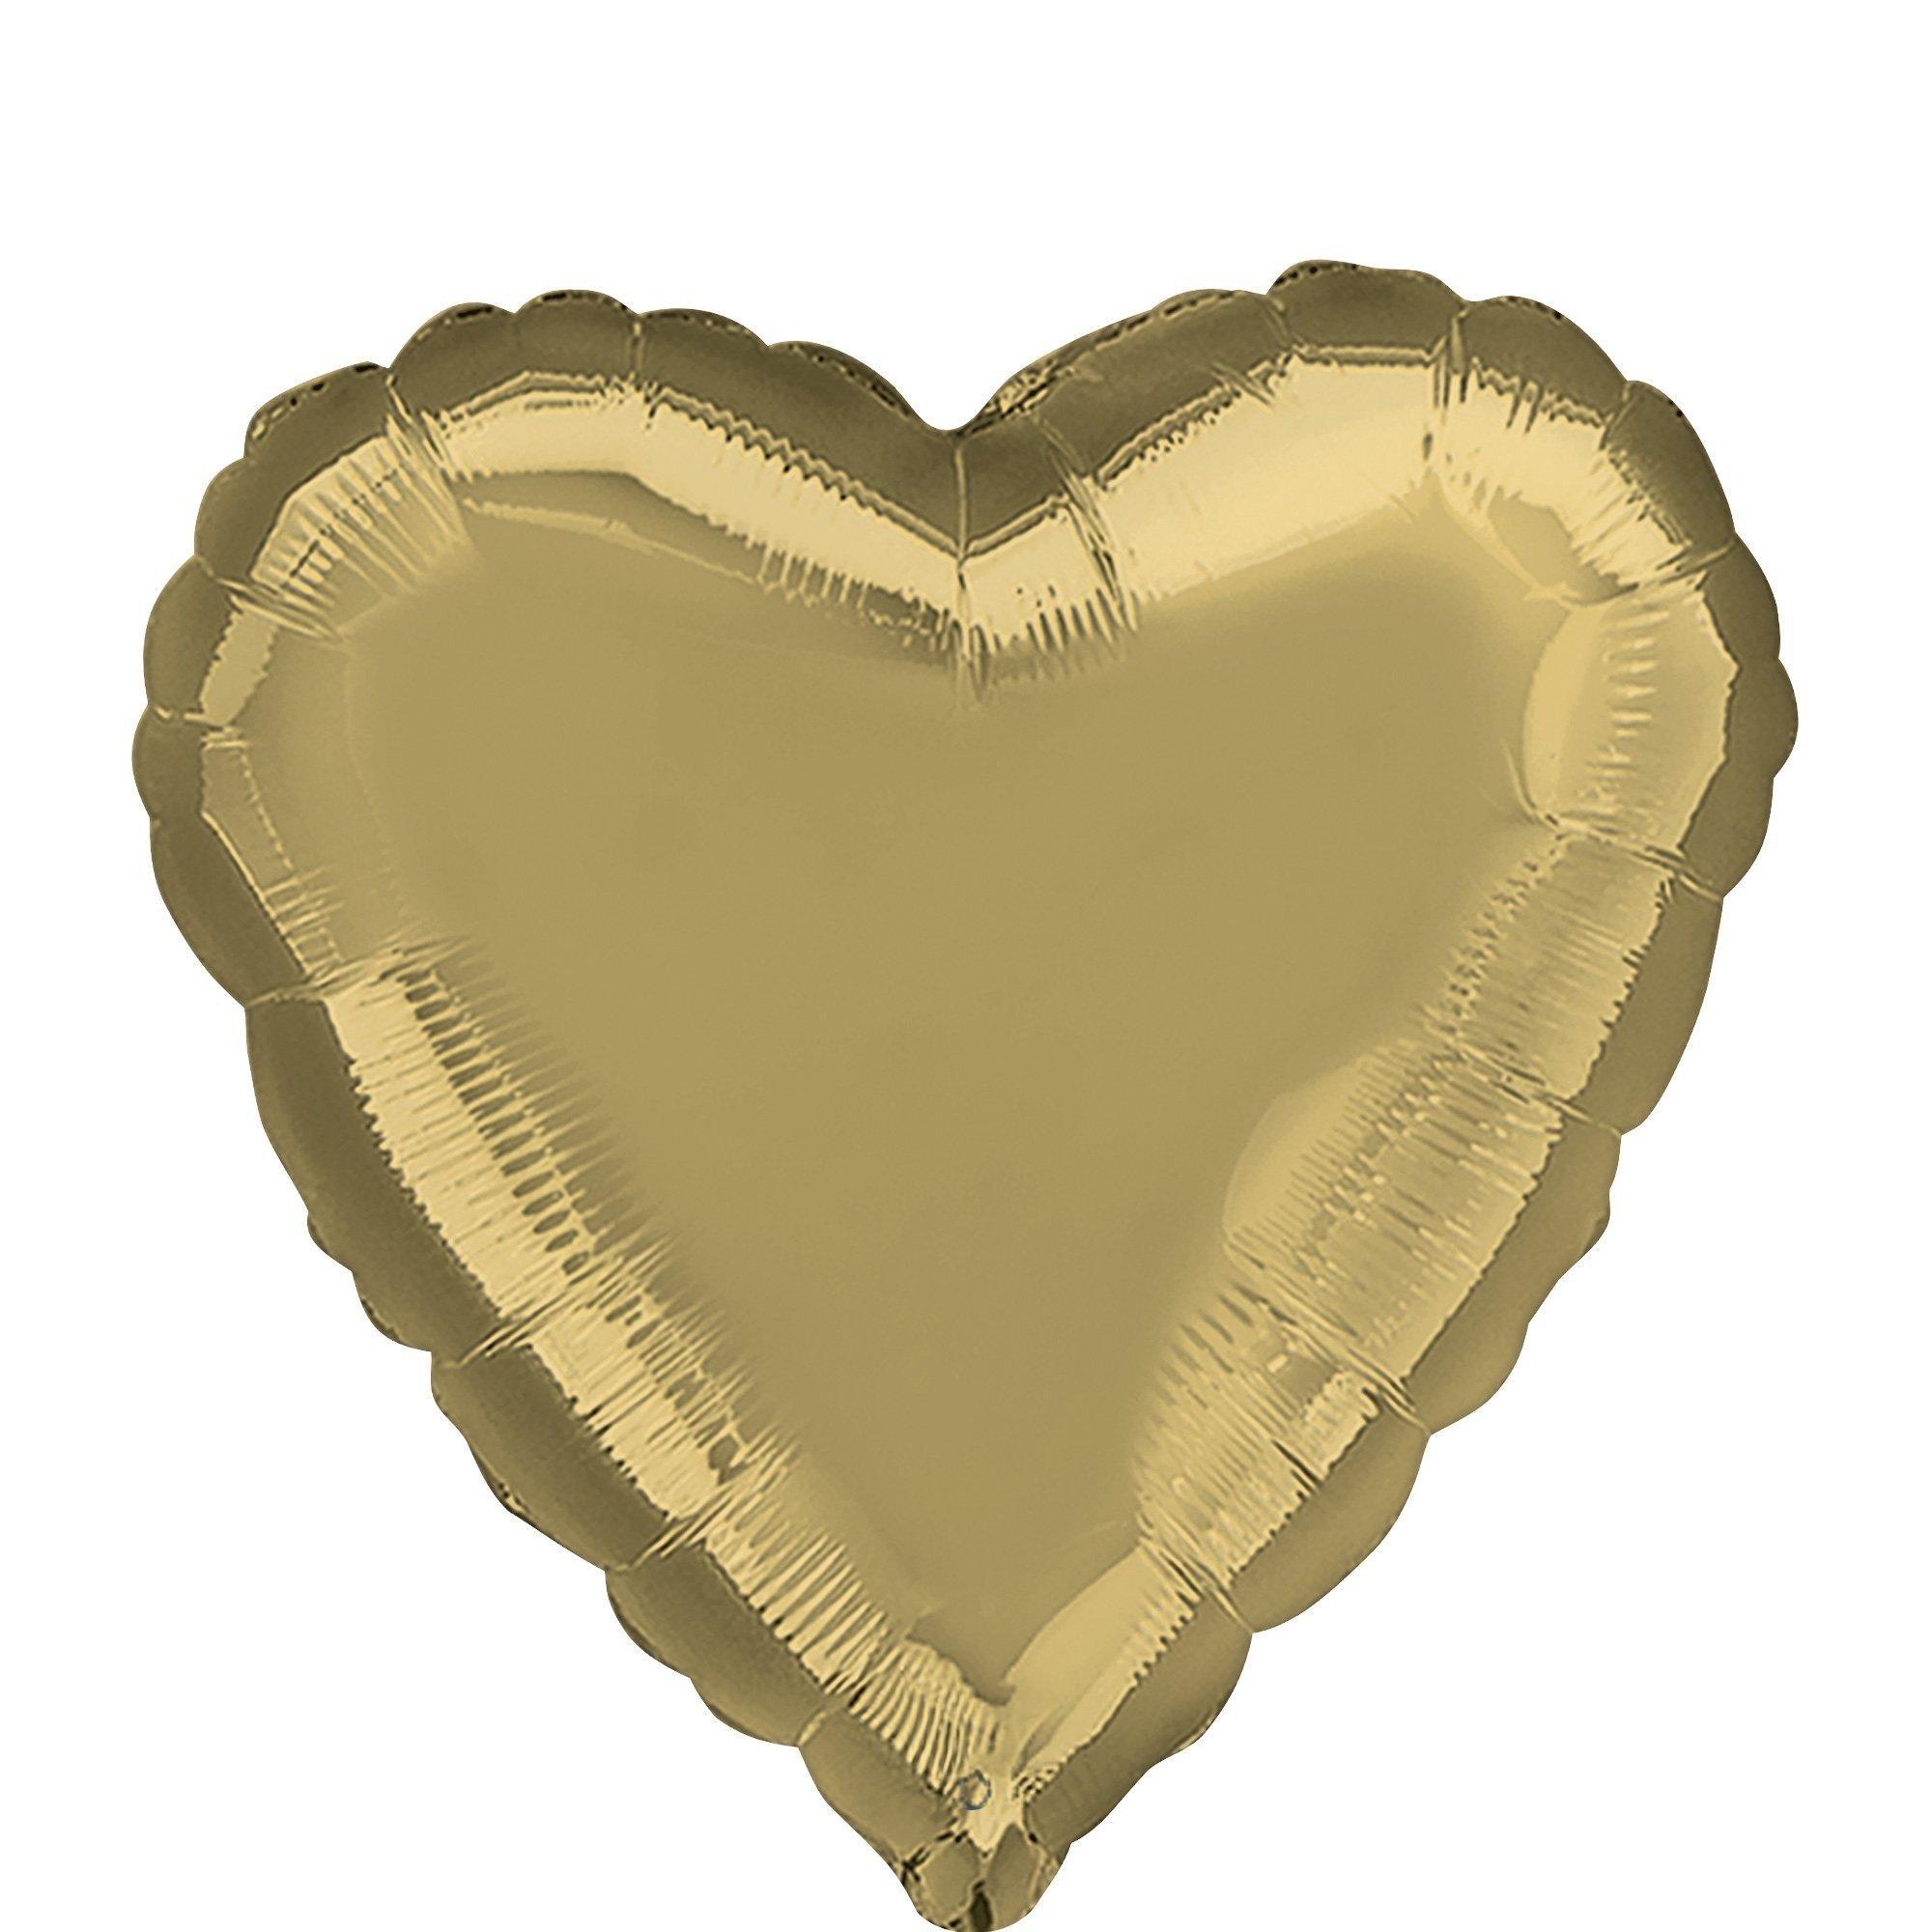 Gold, Silver & White Heart Foil Balloon Bouquet, 12pc